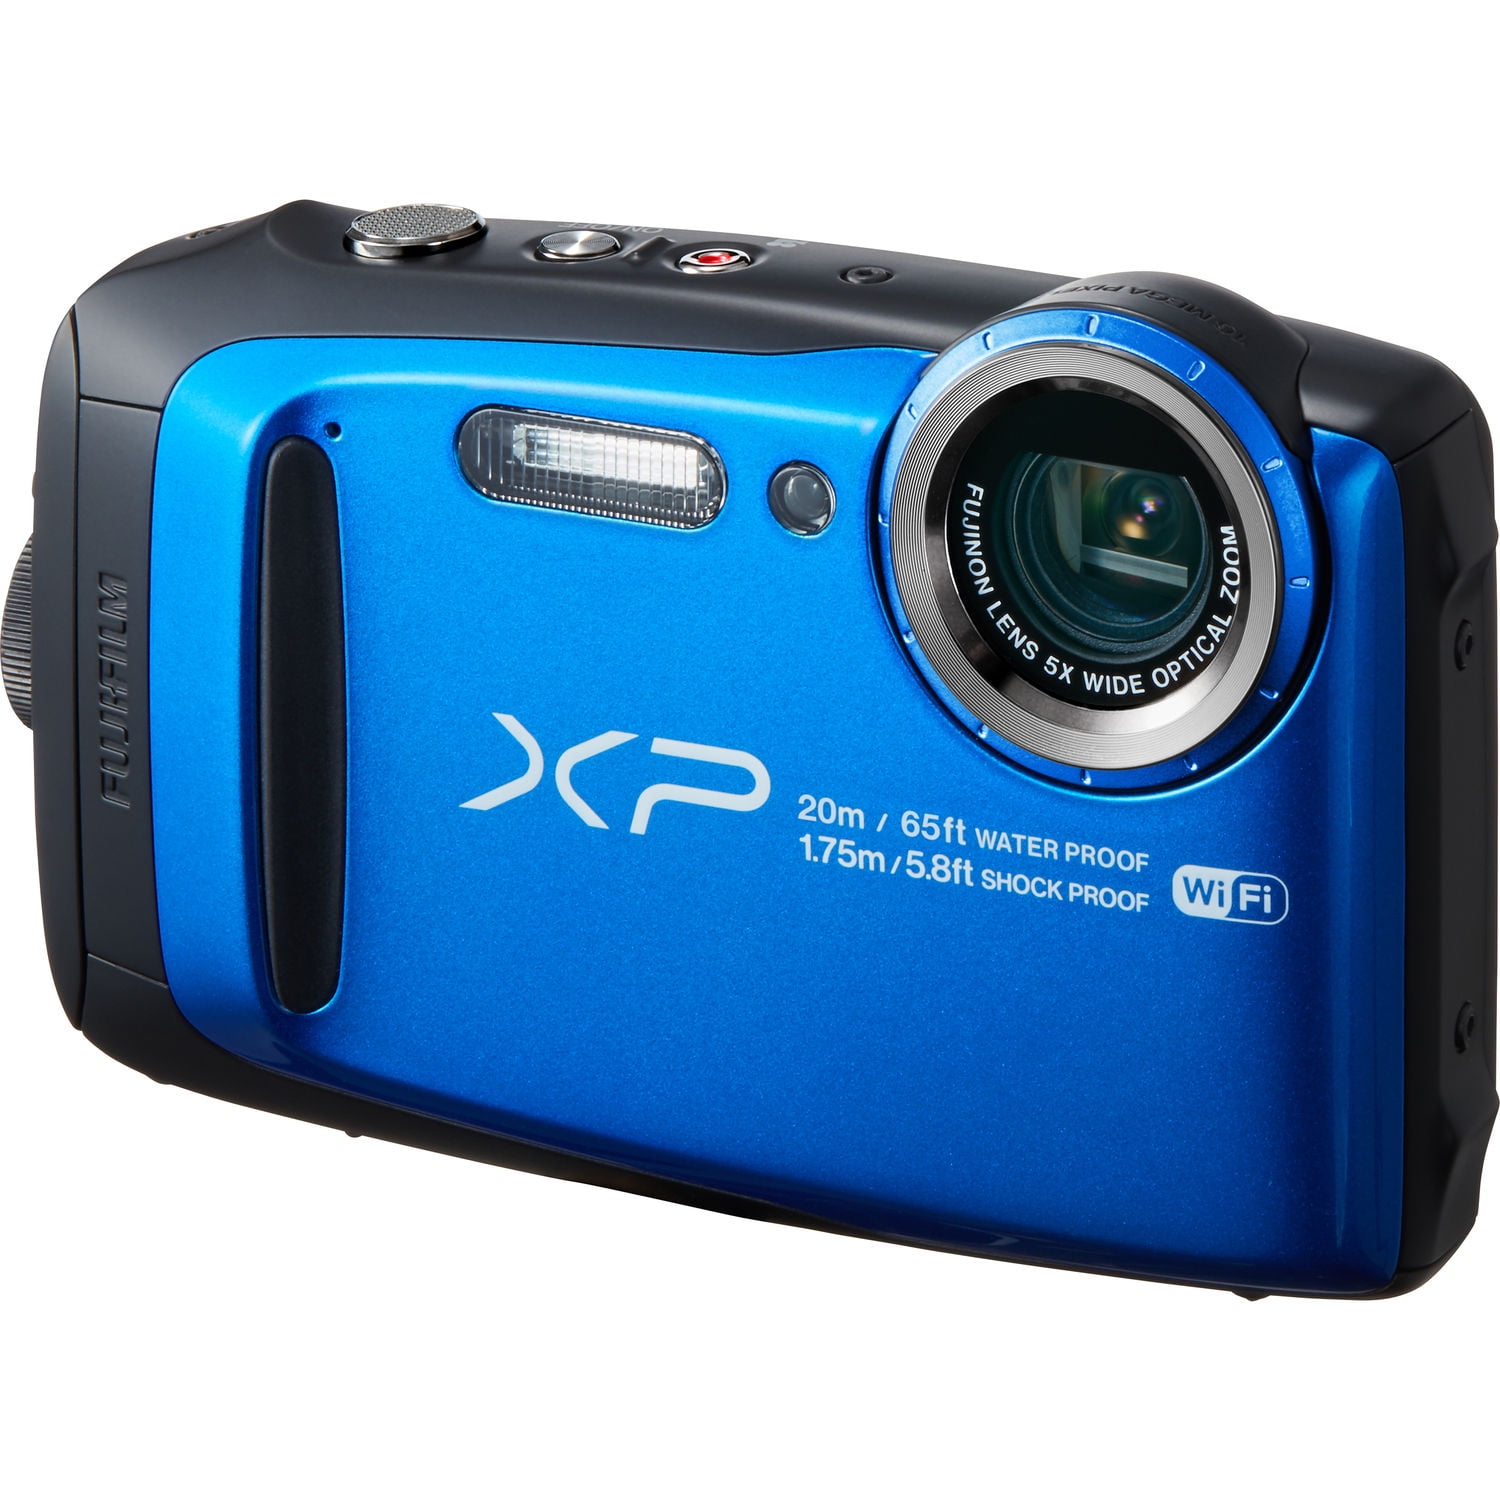 Fujifilm FinePix XP120 Digital Camera - Blue - Walmart.com - Walmart.com